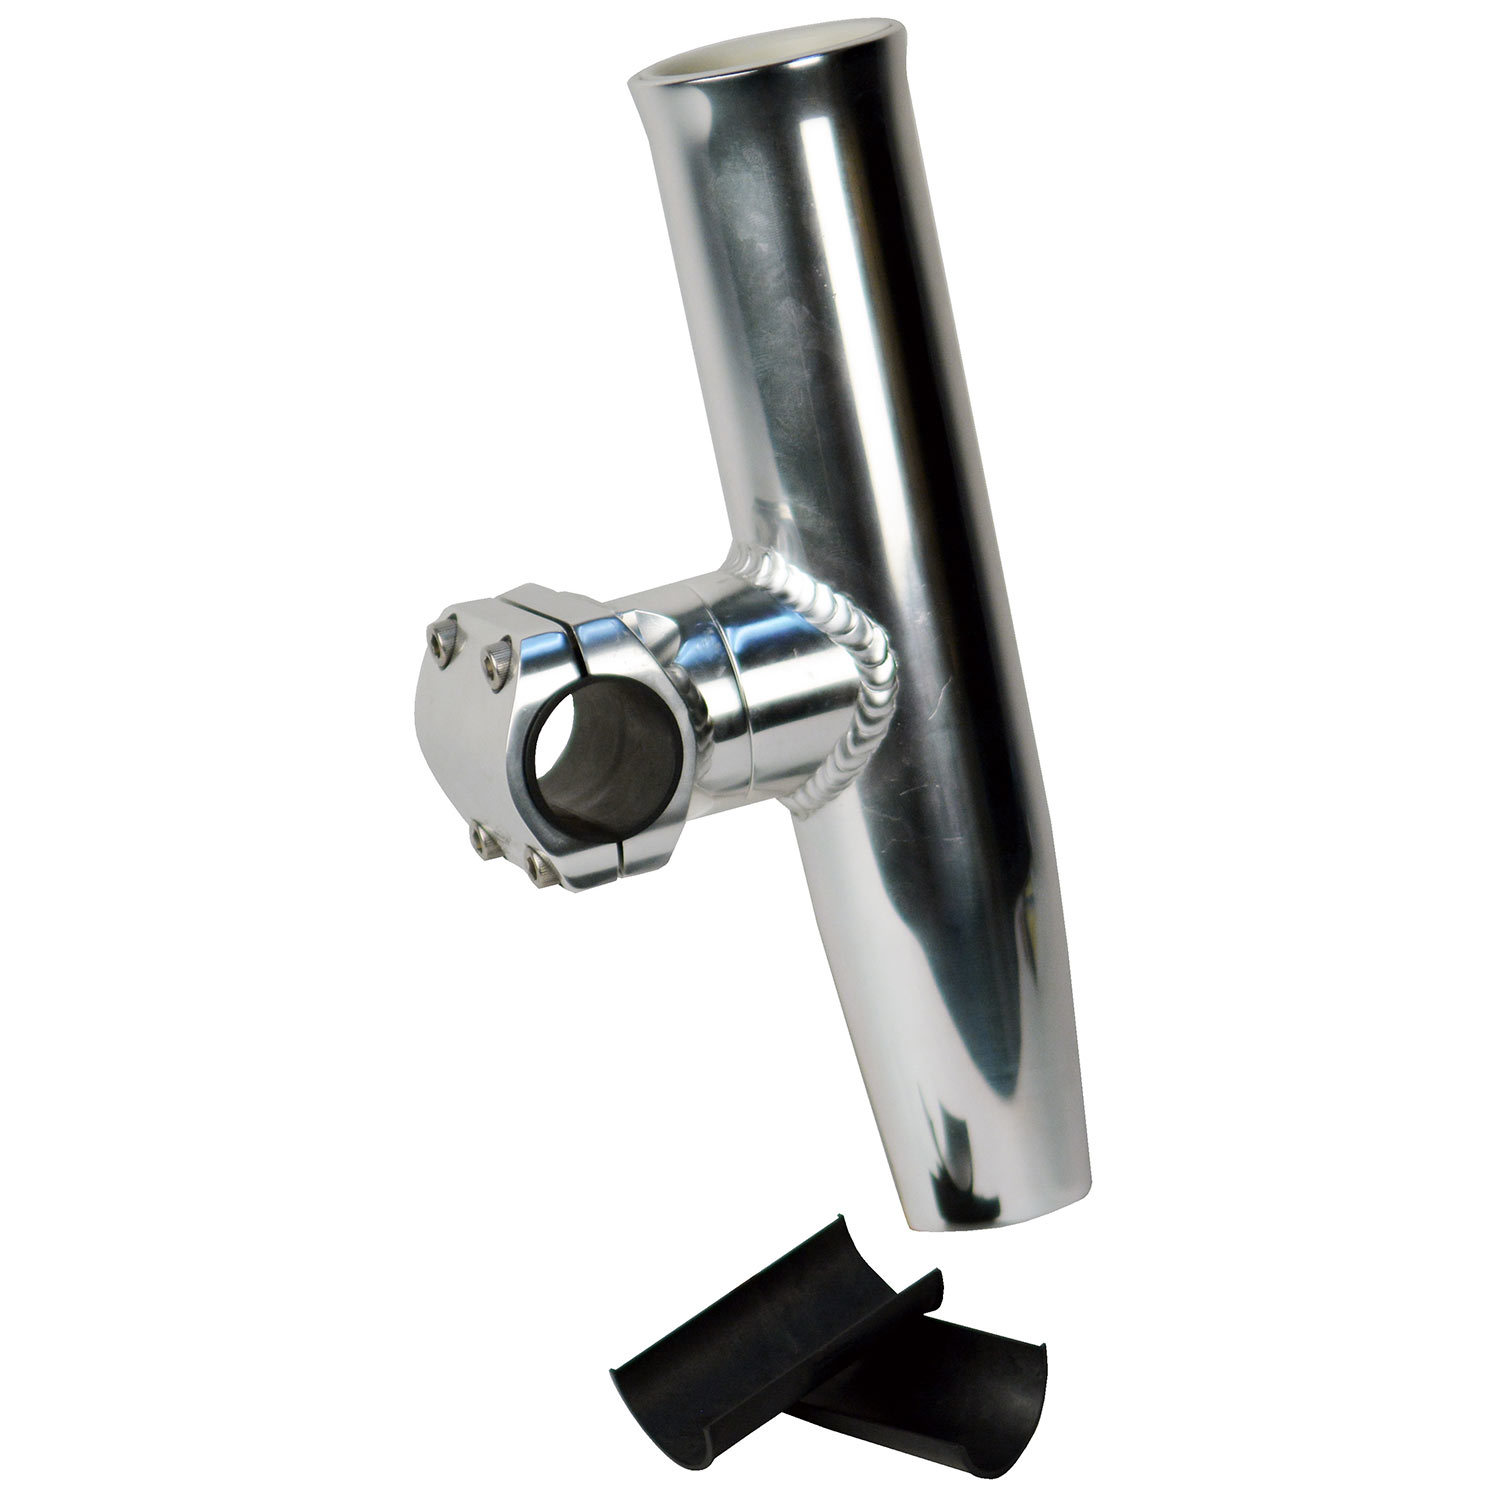 C E SMITH Aluminum Adjustable Rod Holder, Fits 1-1/4 or 1-5/16